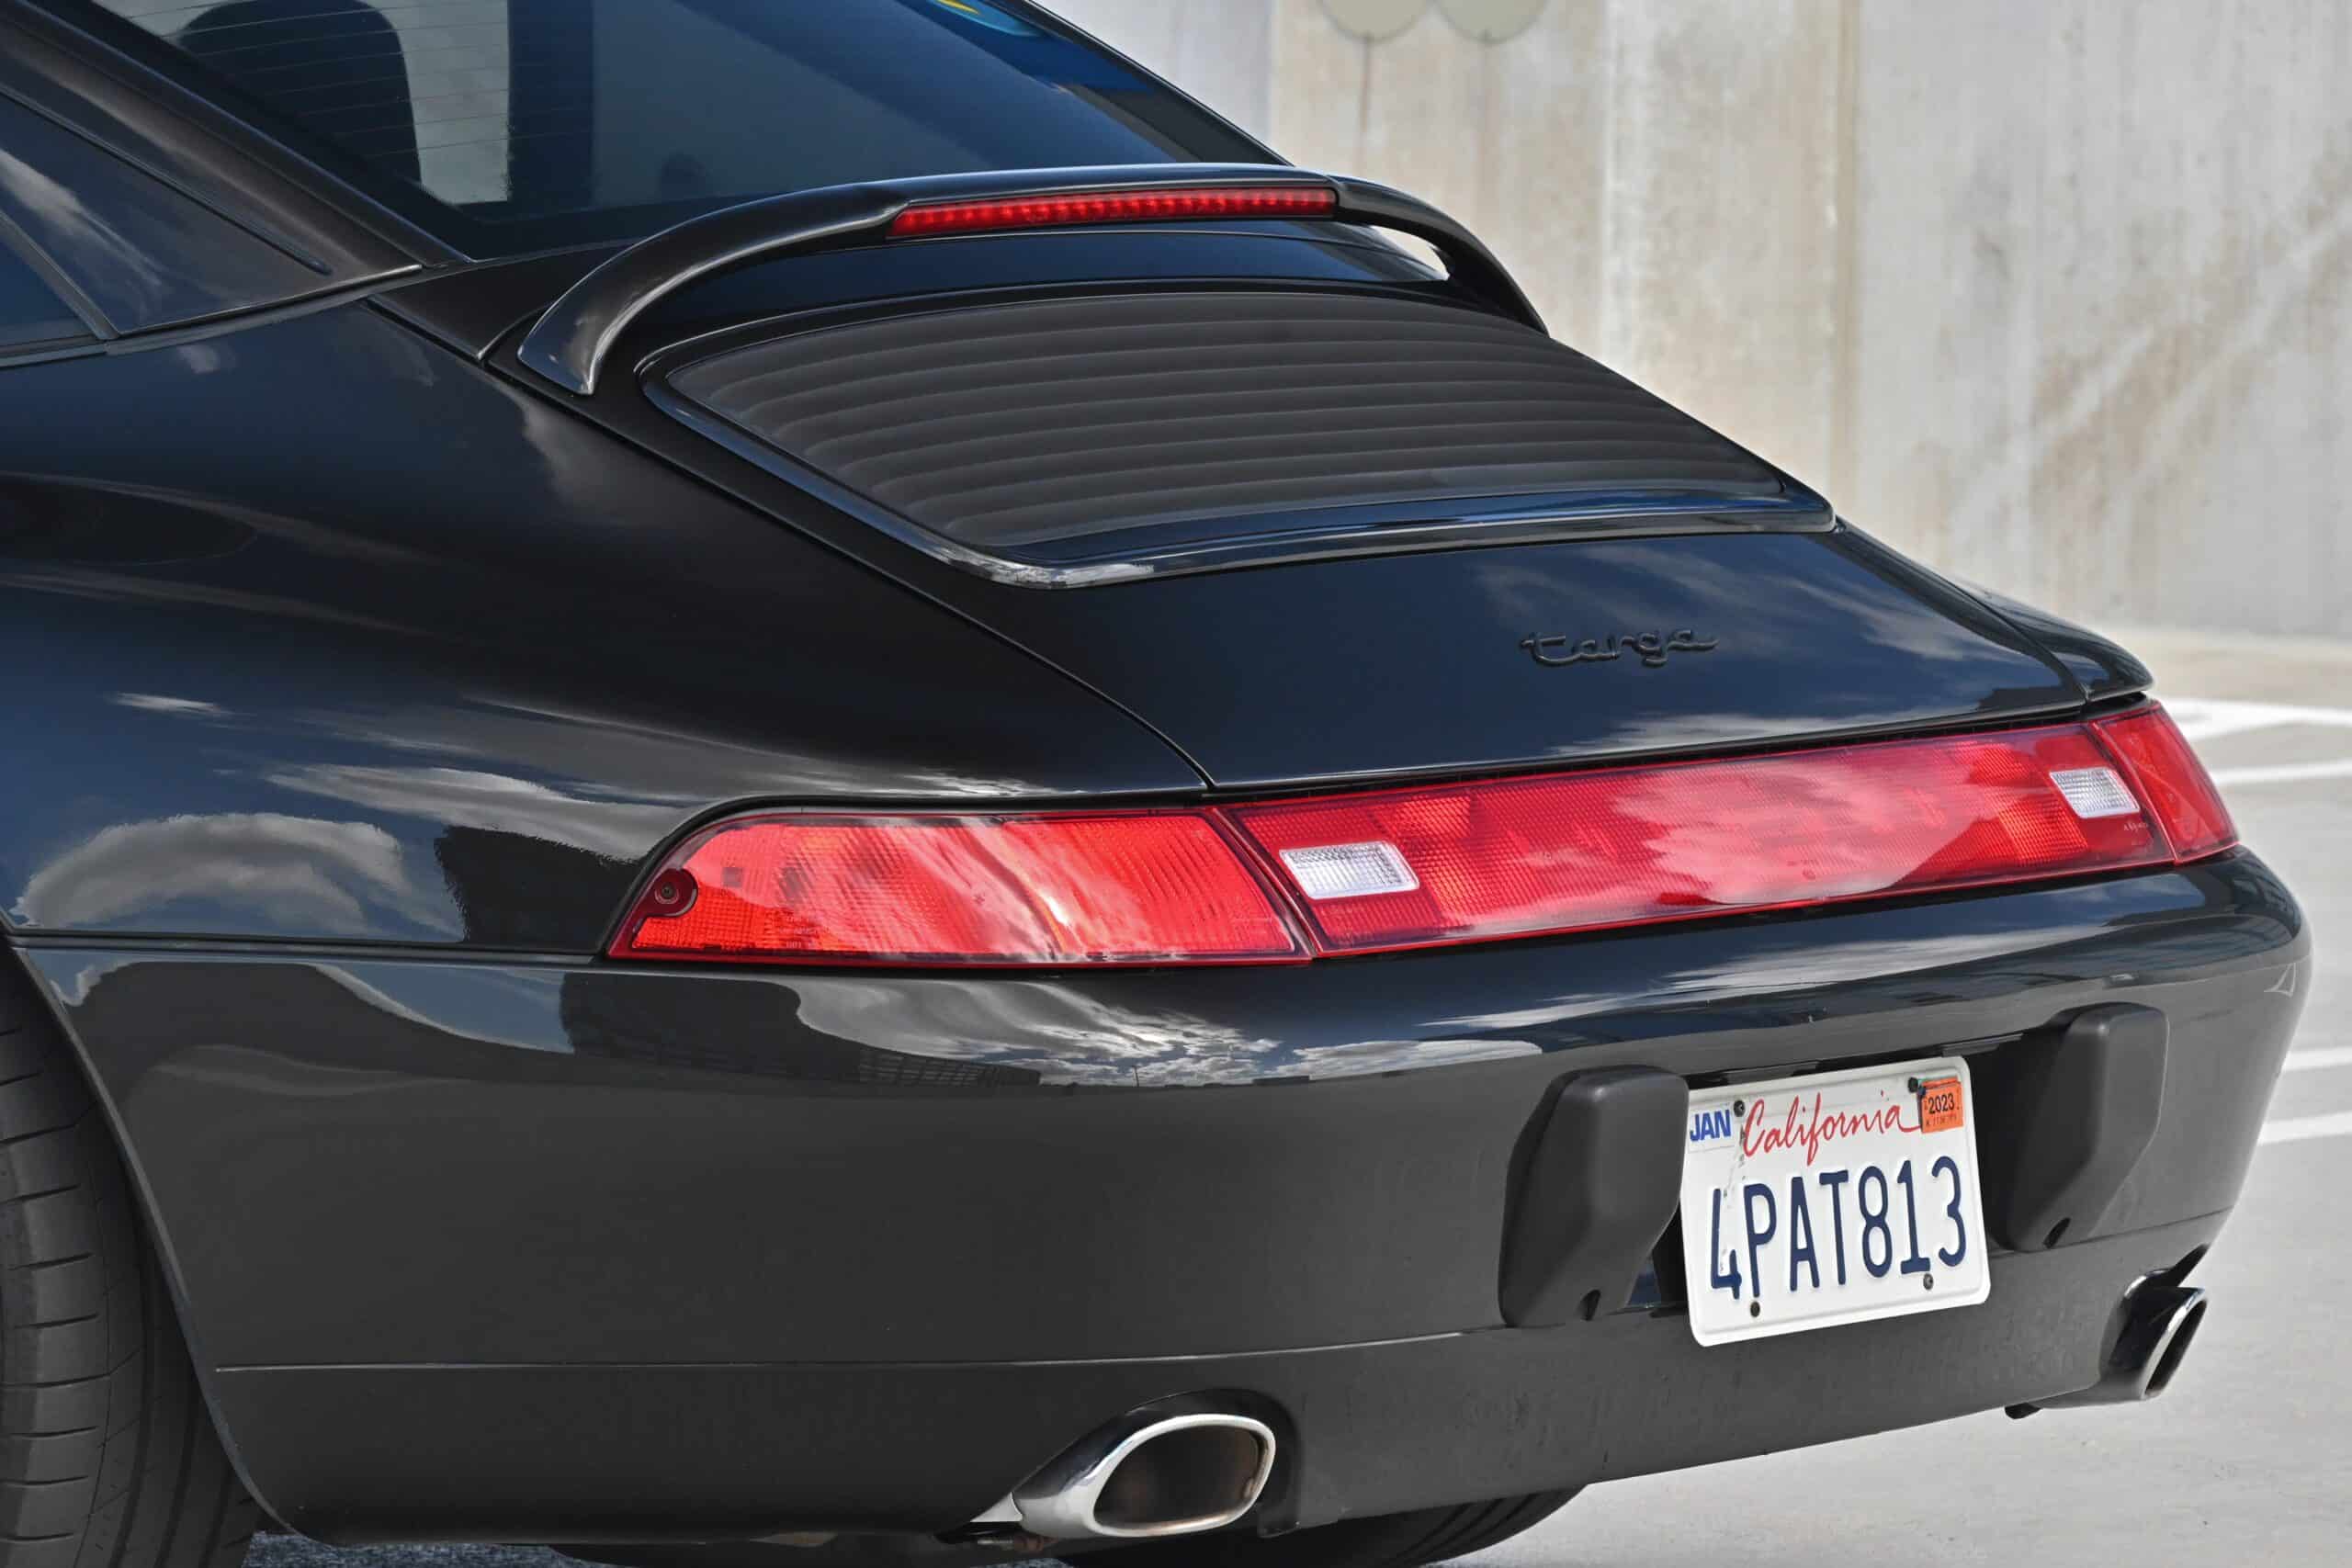 1996 Porsche 911 993 Targa 1 of 462 US cars – 2 Owner – California Car – 6 Speed Manual – Like NEW